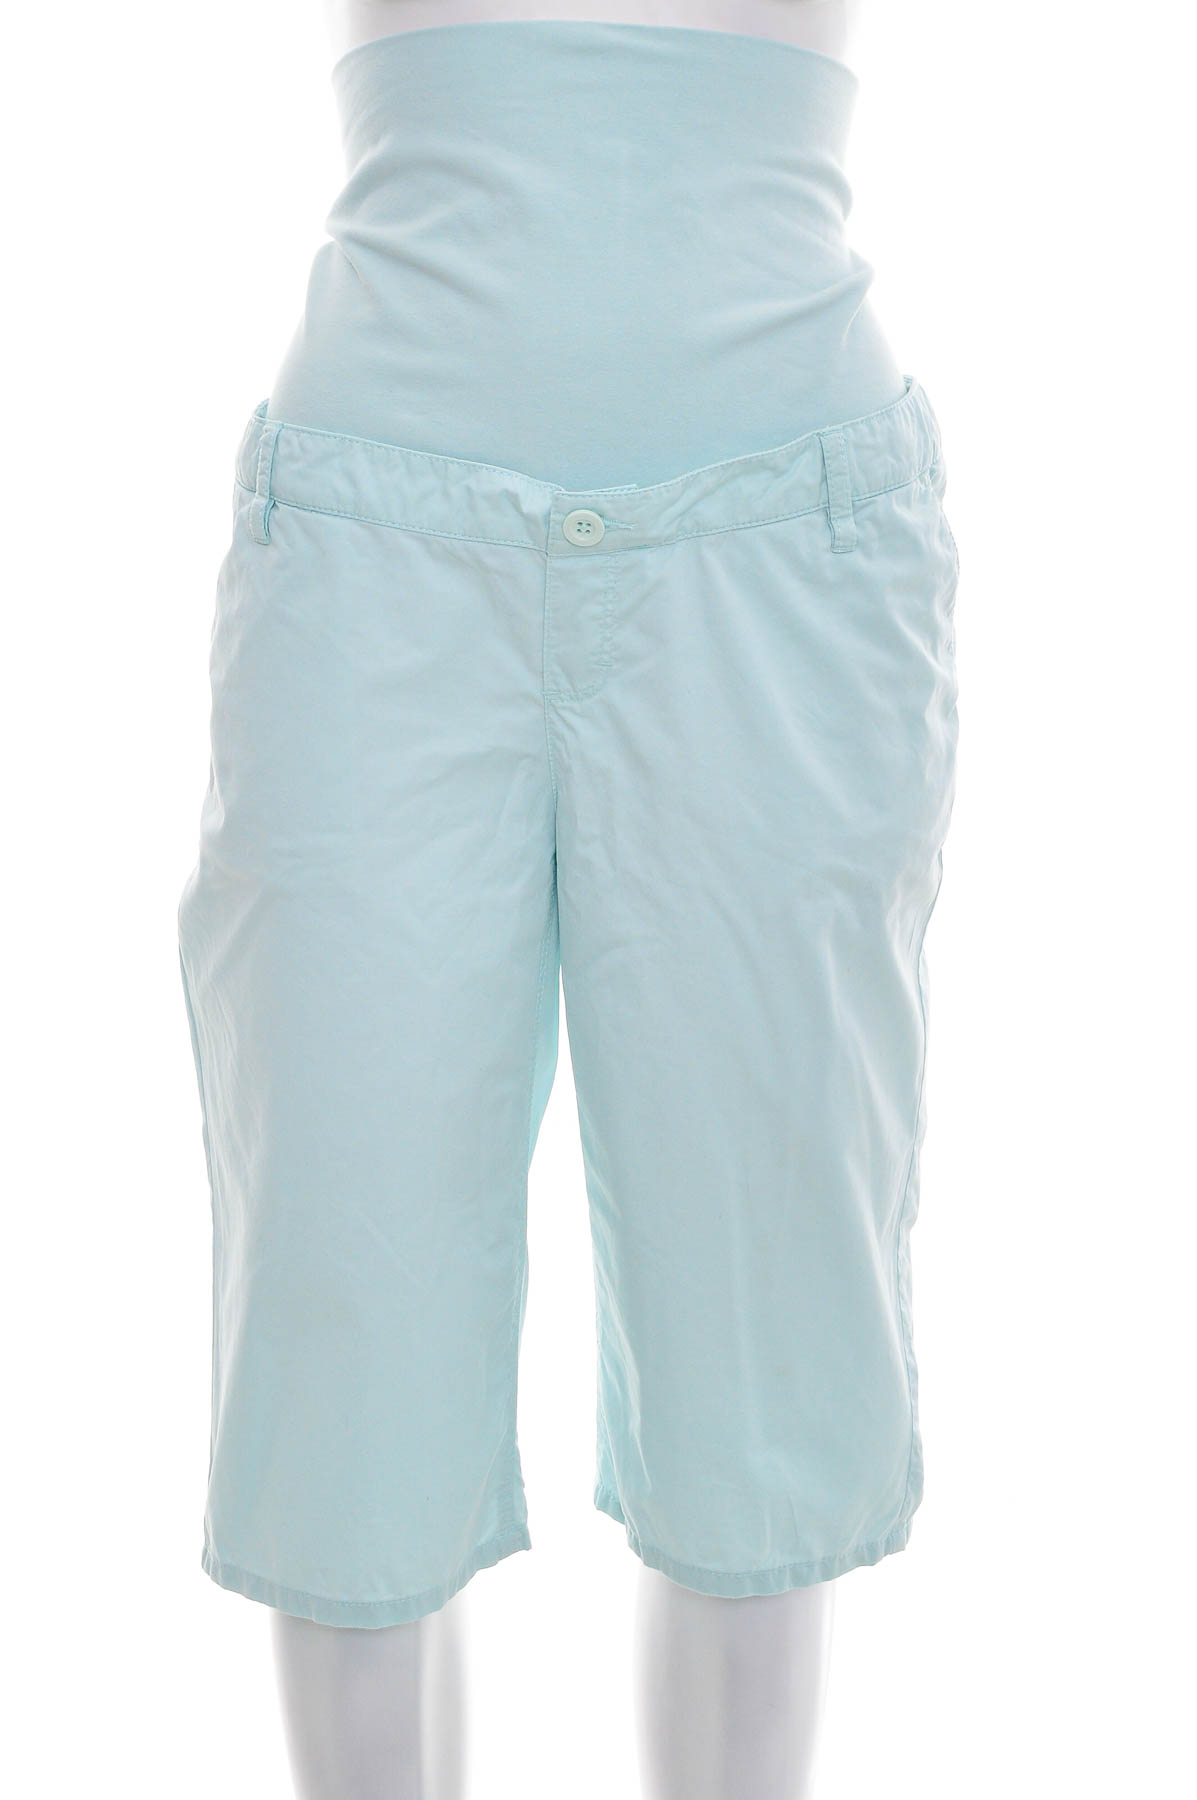 Female shorts for pregnant womenи - ESPRIT - 0